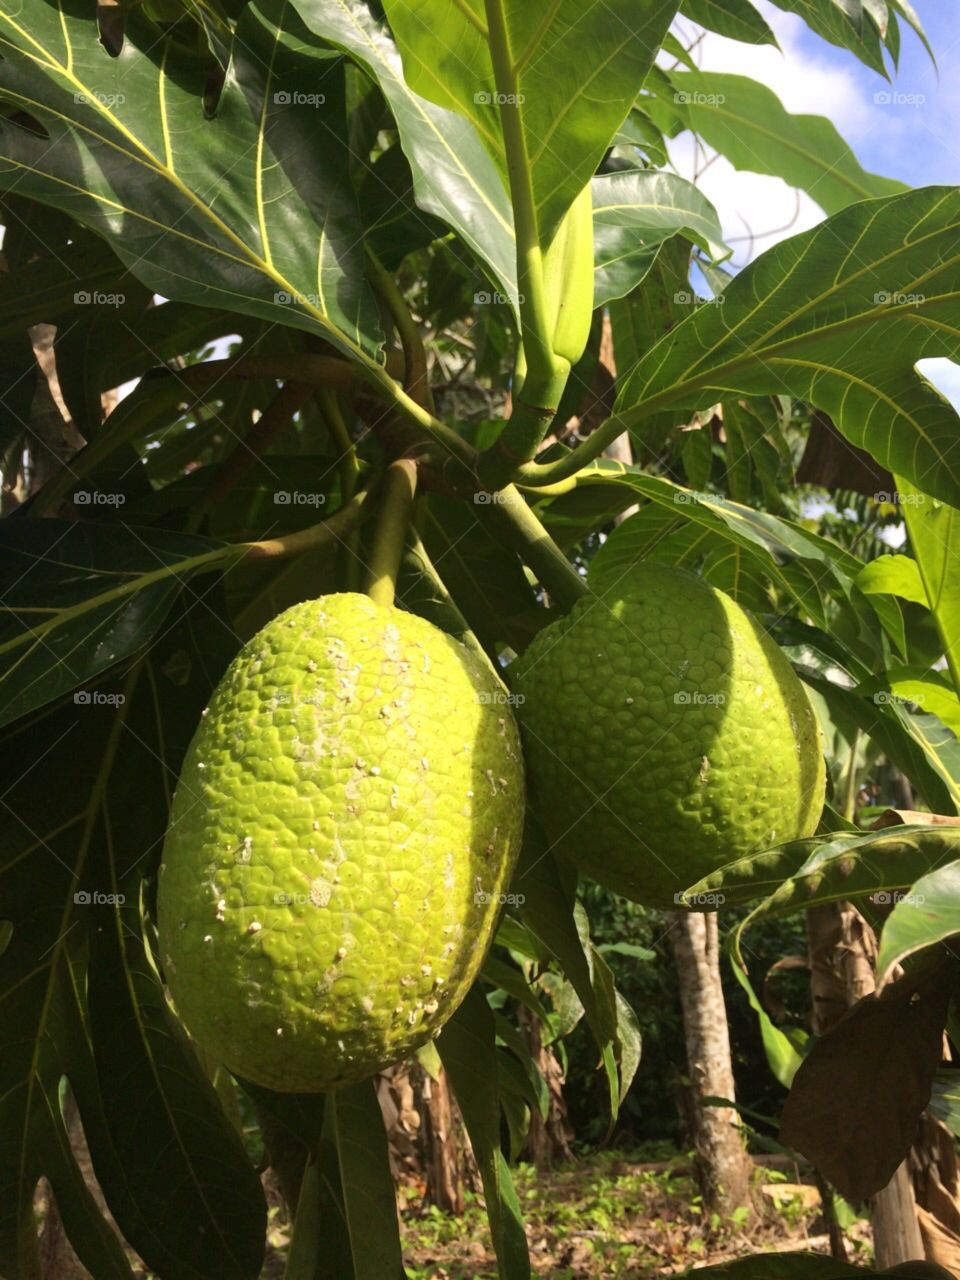 Breadfruit. Green breadfruit hanging from a tree